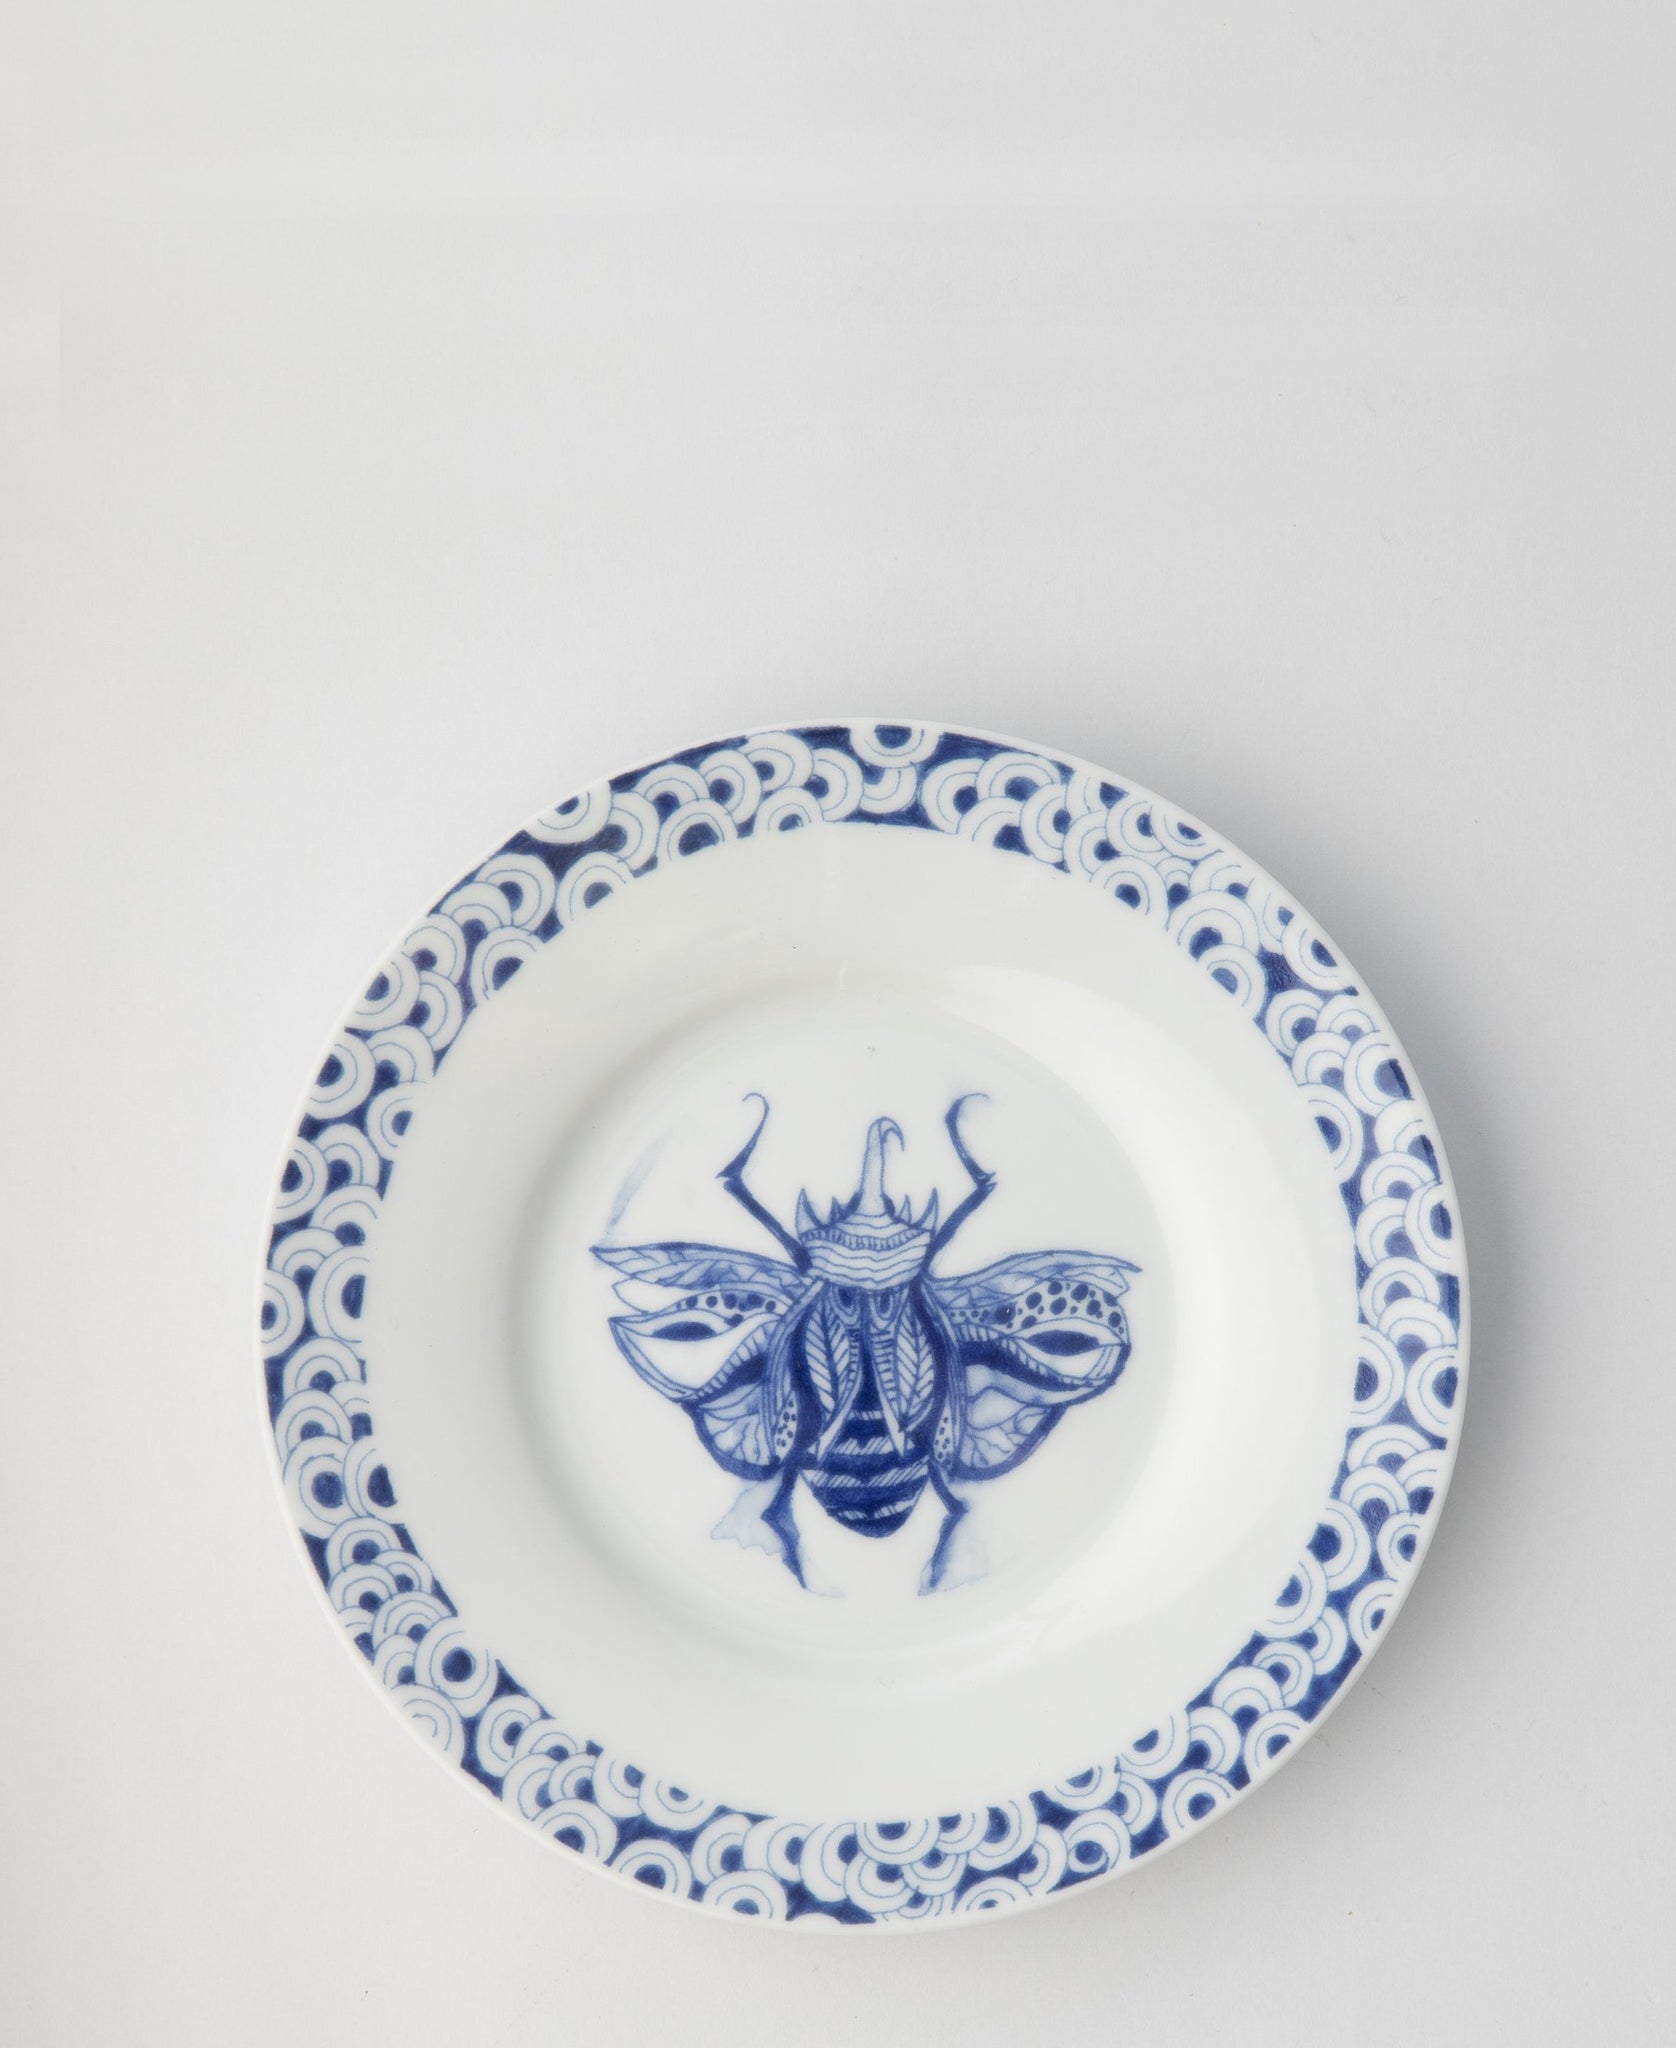 Sarie Mooi Chameleon & Insect 200ml Gift Set - White